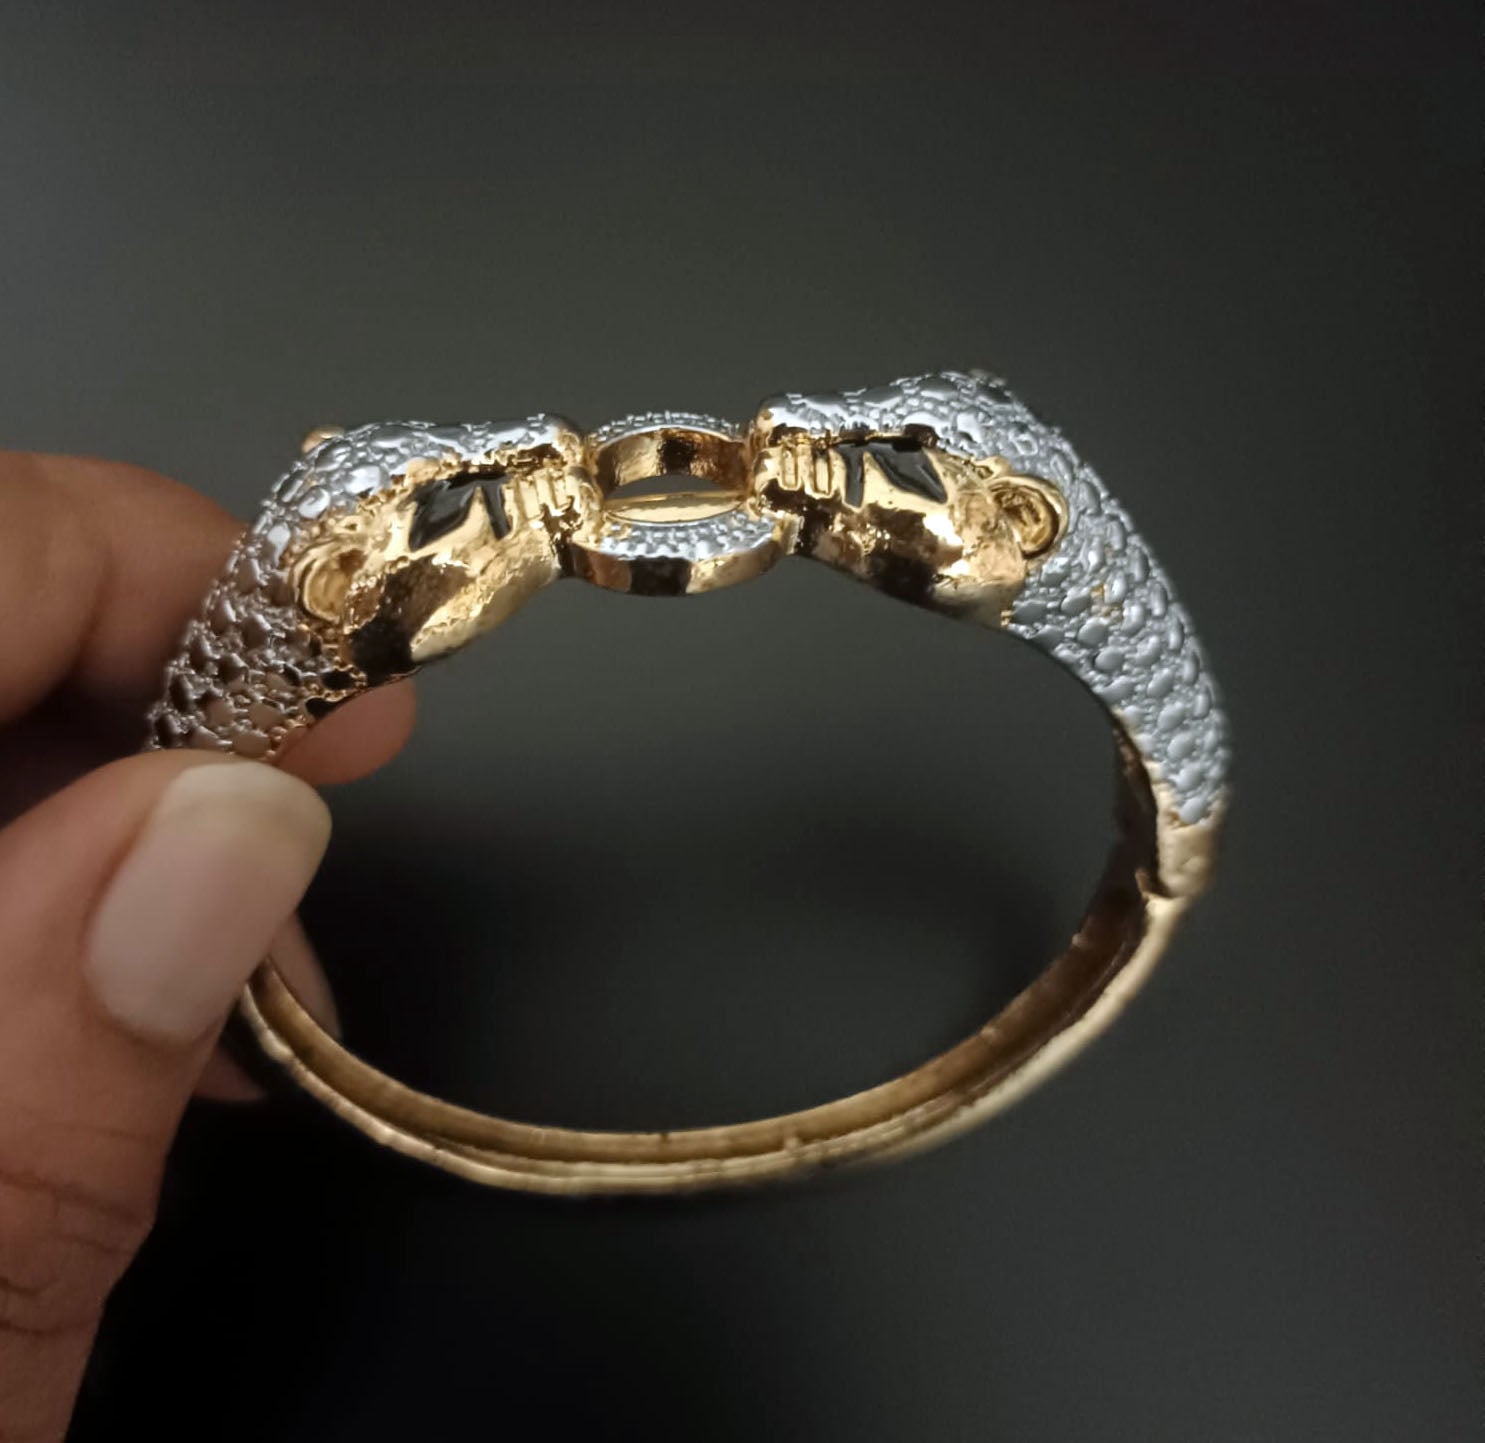 The Jaguar Gold Bracelet